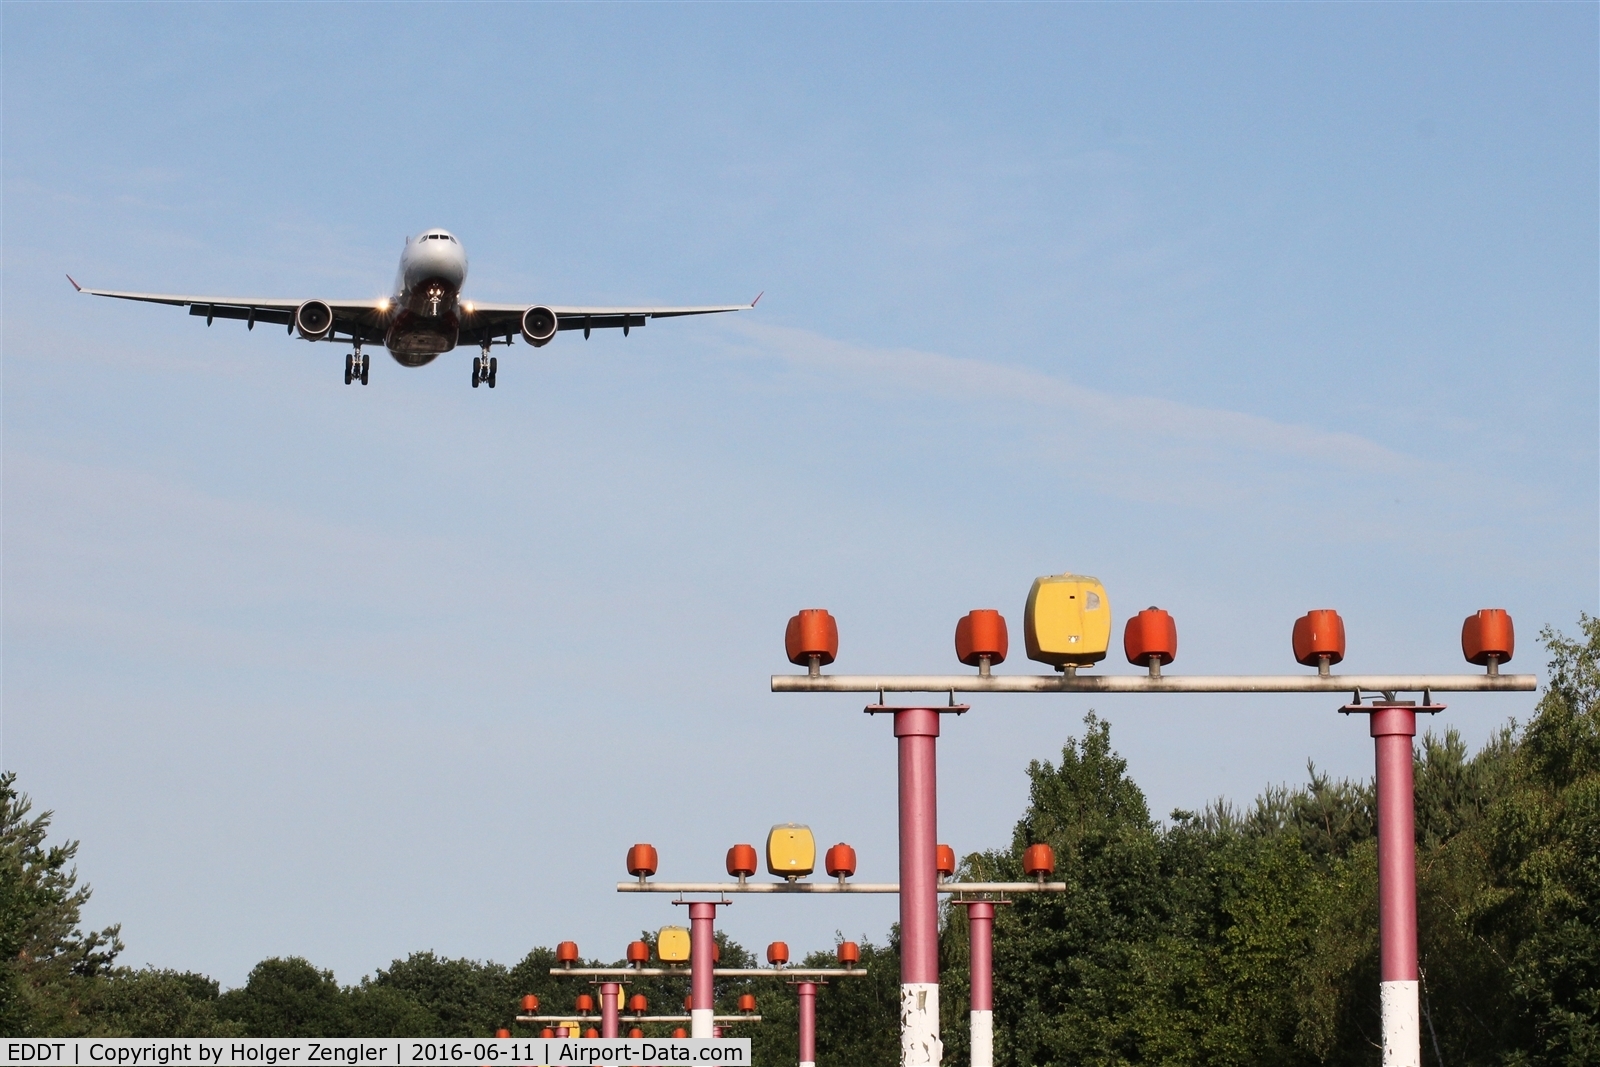 Tegel International Airport (closing in 2011), Berlin Germany (EDDT) - TXL waving good bye tour no.4 since 2011 